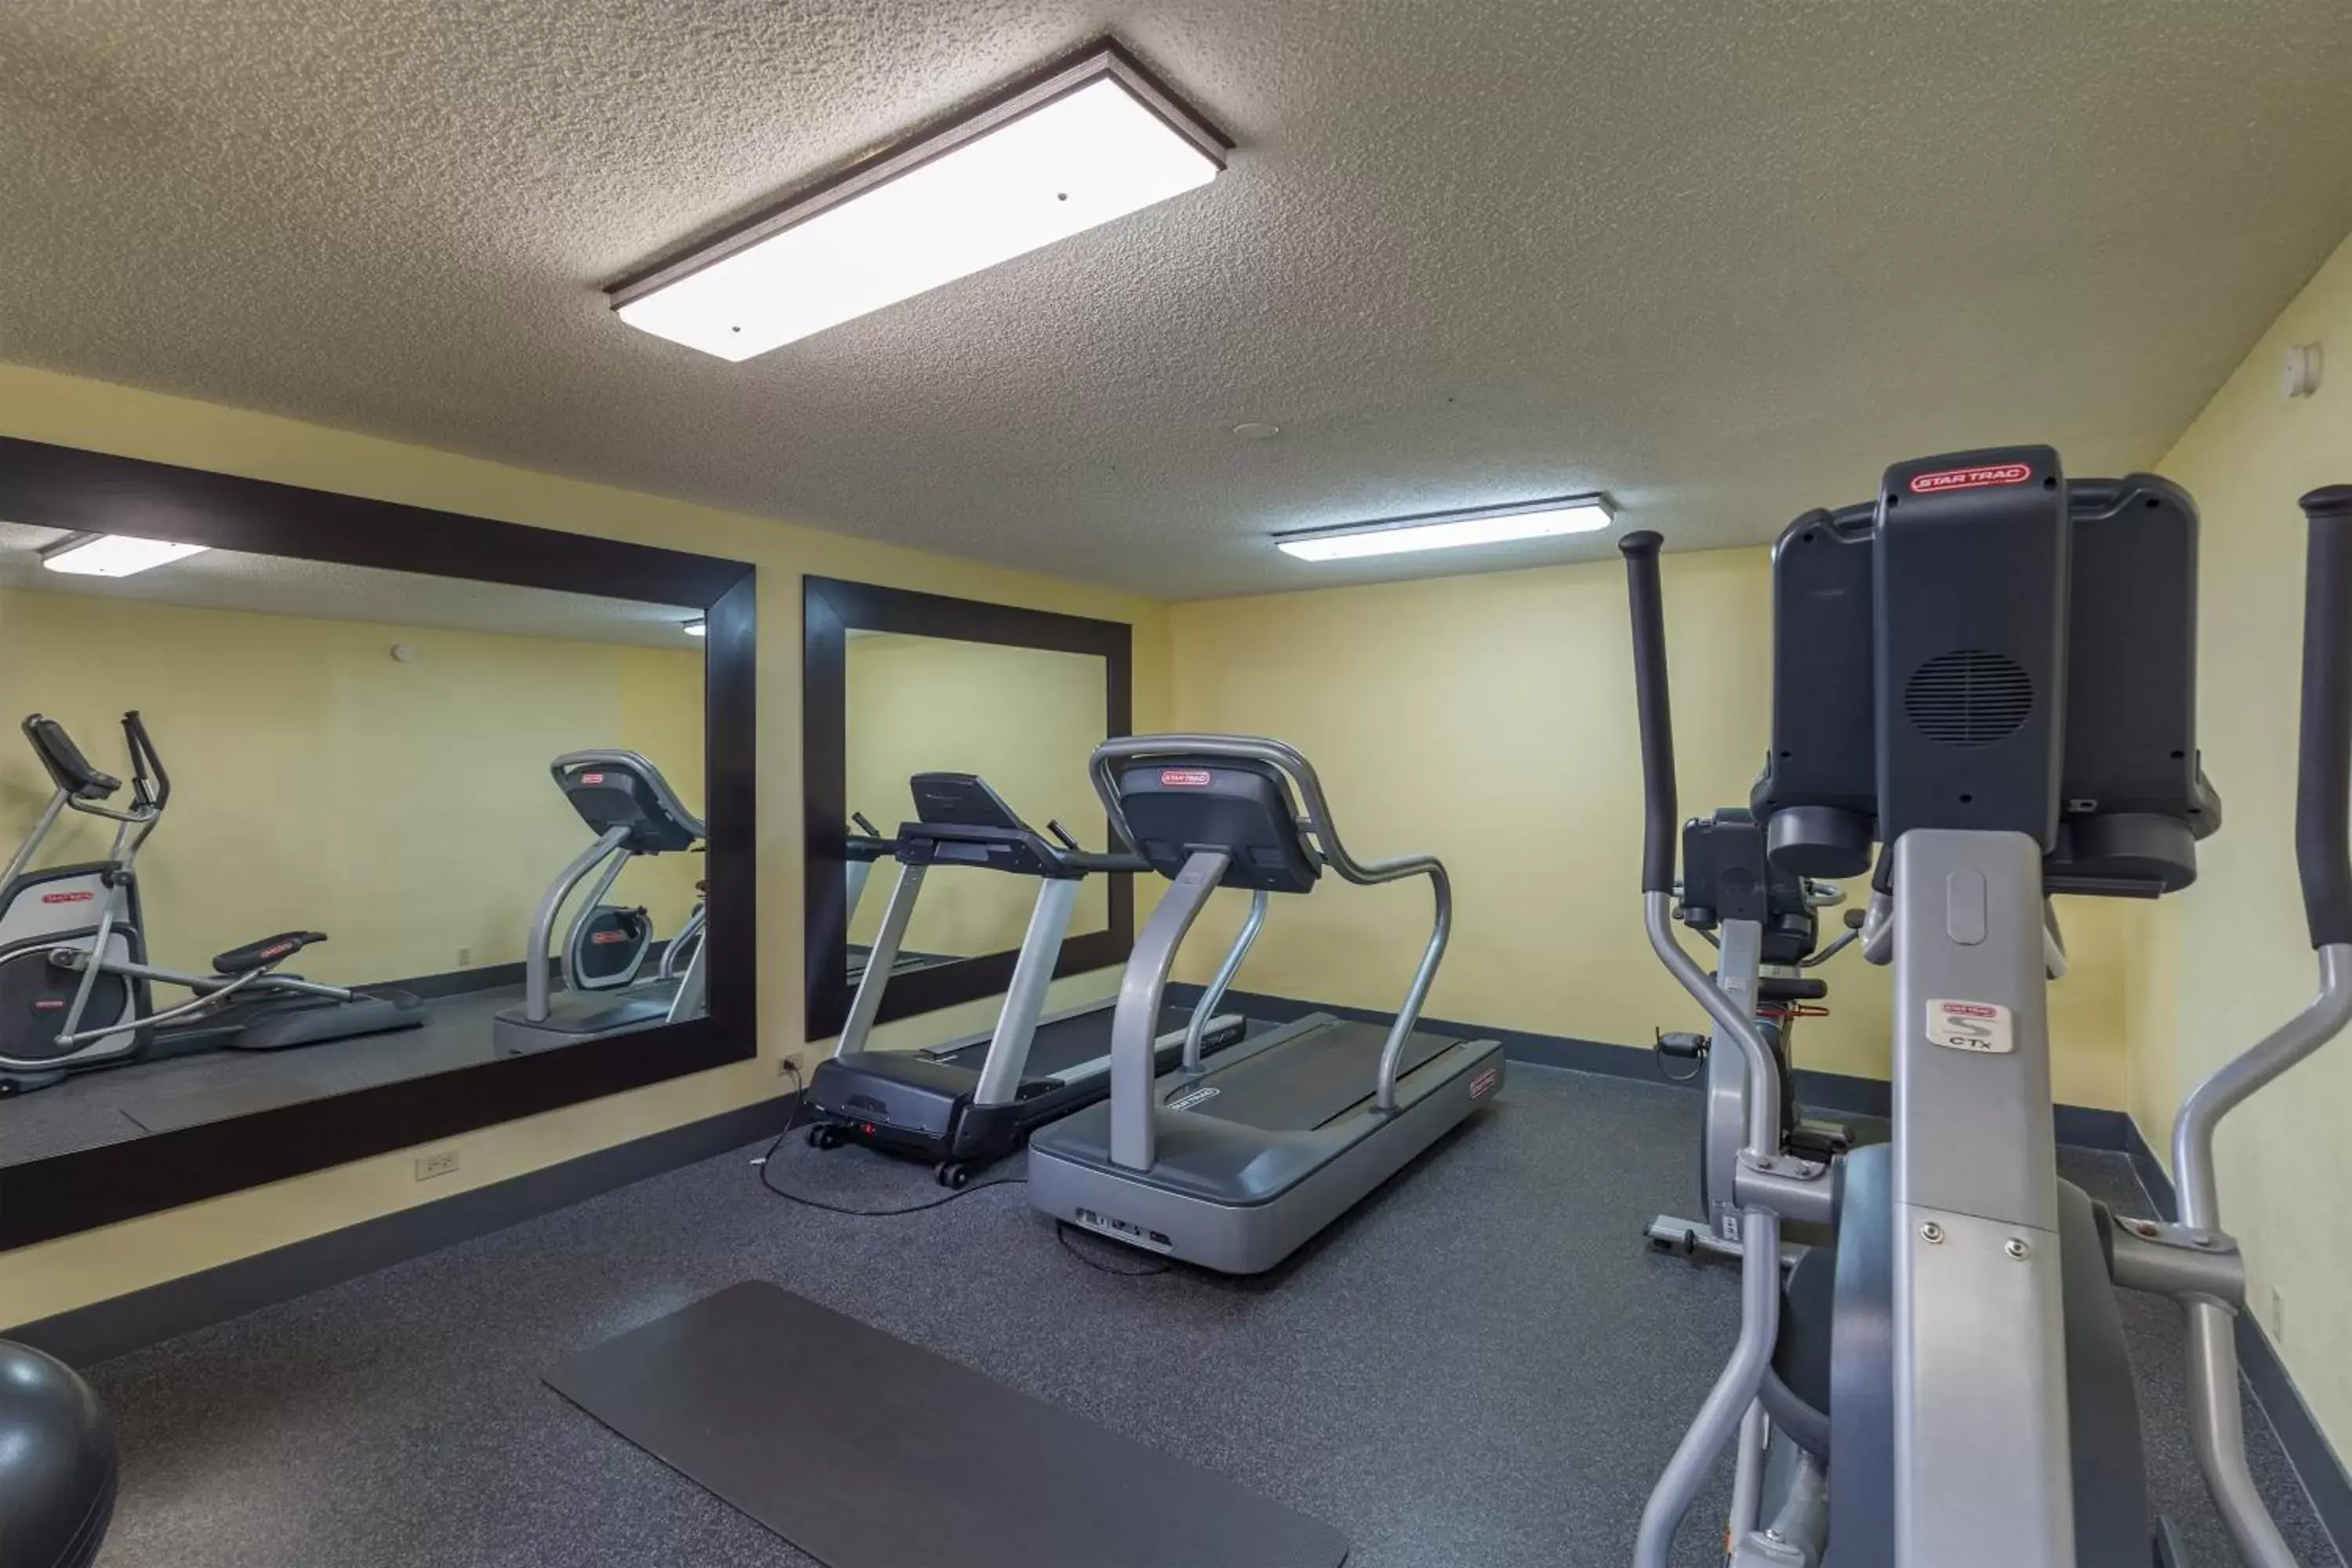 Fitness centre/facilities, Fitness Center/Facilities in Brandon Center Hotel